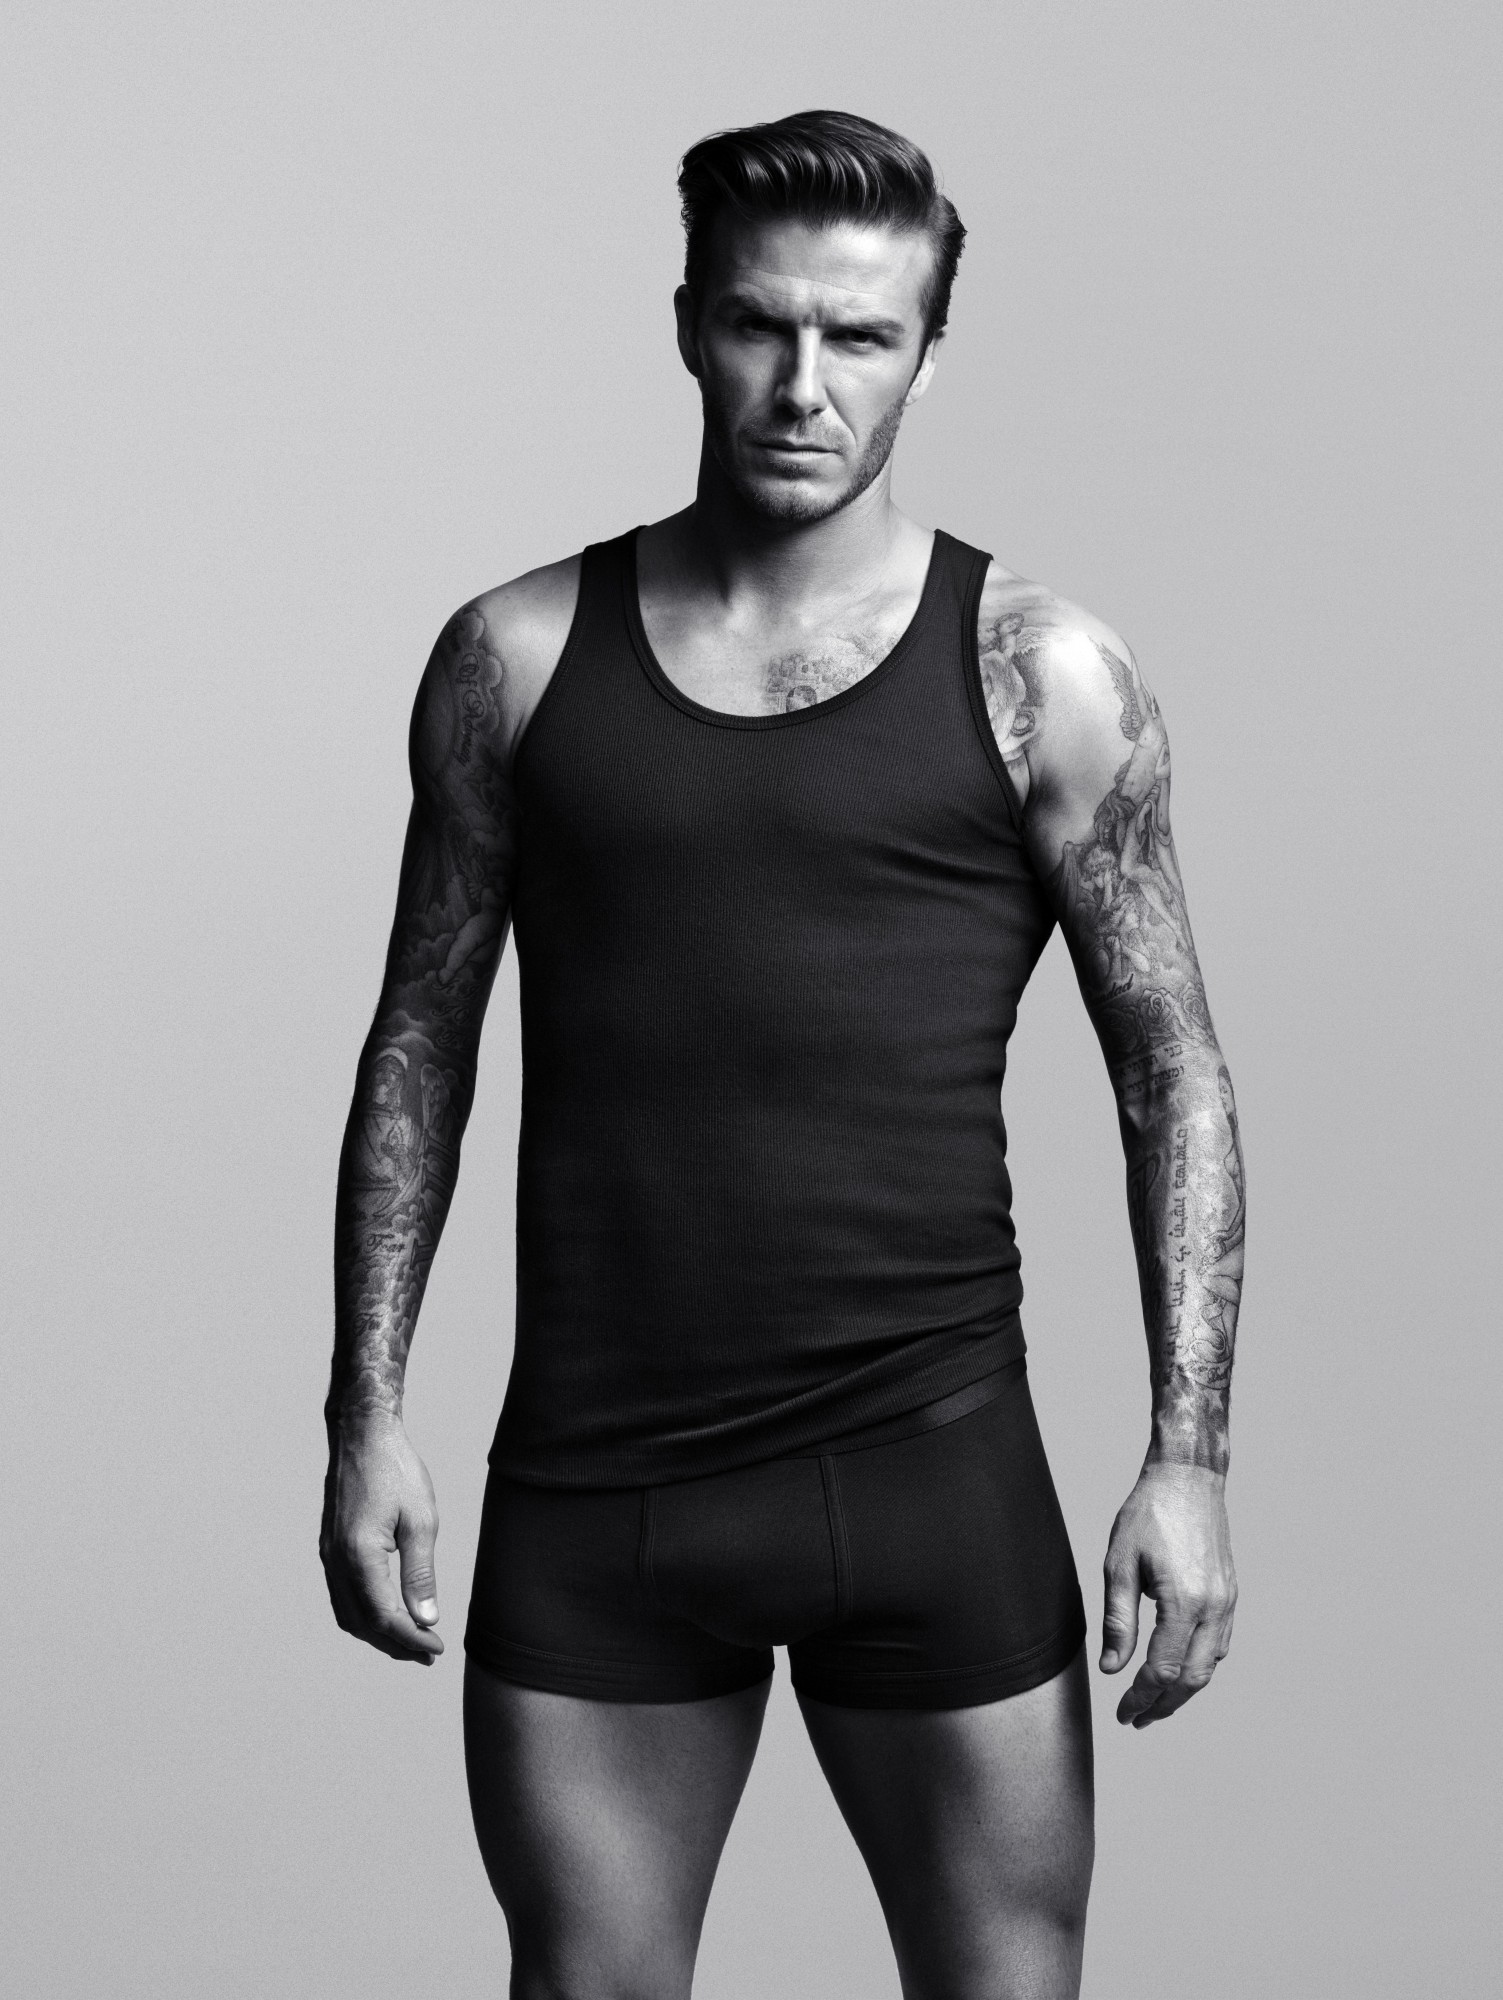 DAVID BECKHAM Bodywear collection for H&M photos, H&M David Beckham Super Bowl ad, Super Bowl commercial